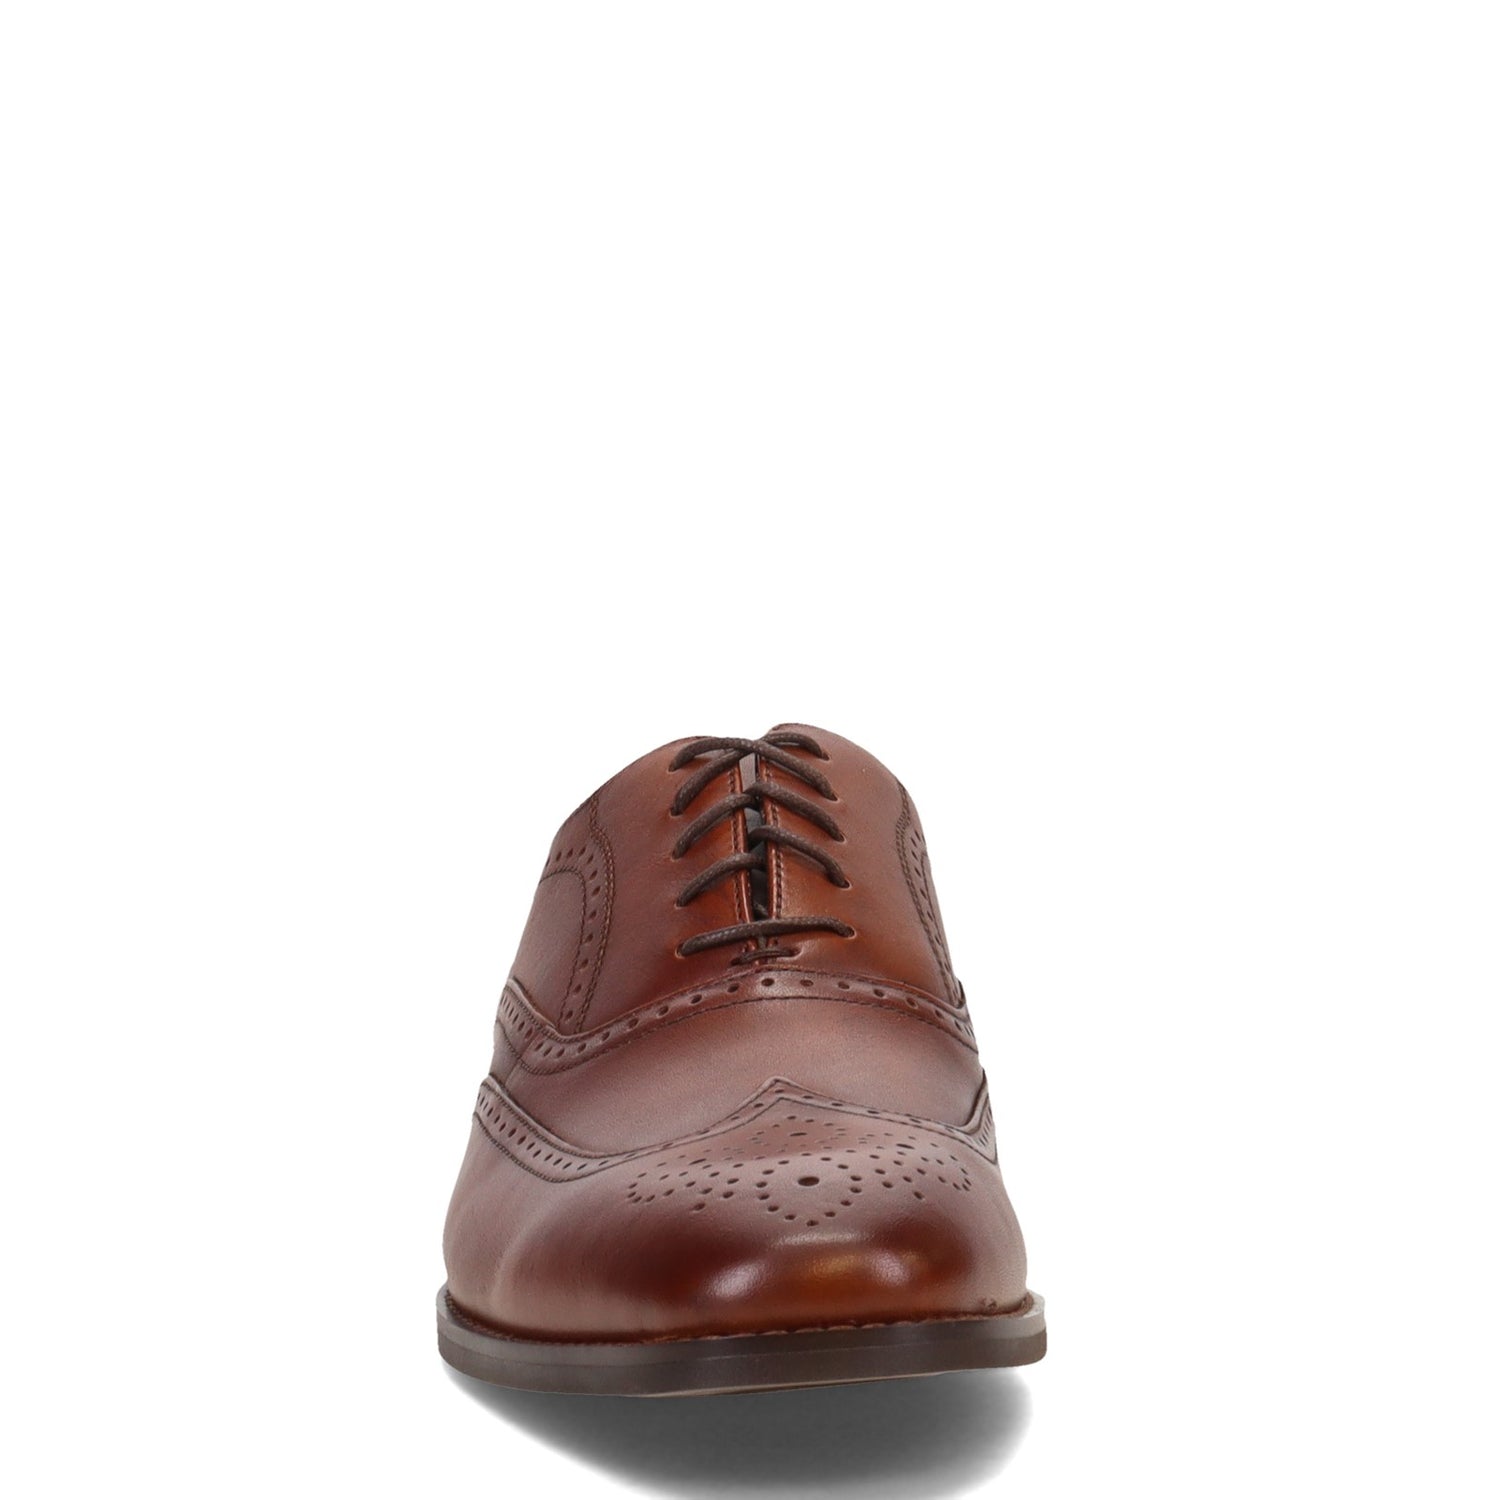 Peltz Shoes  Men's Stacy Adams Kaine Wingtip Oxford COGNAC 25569-221